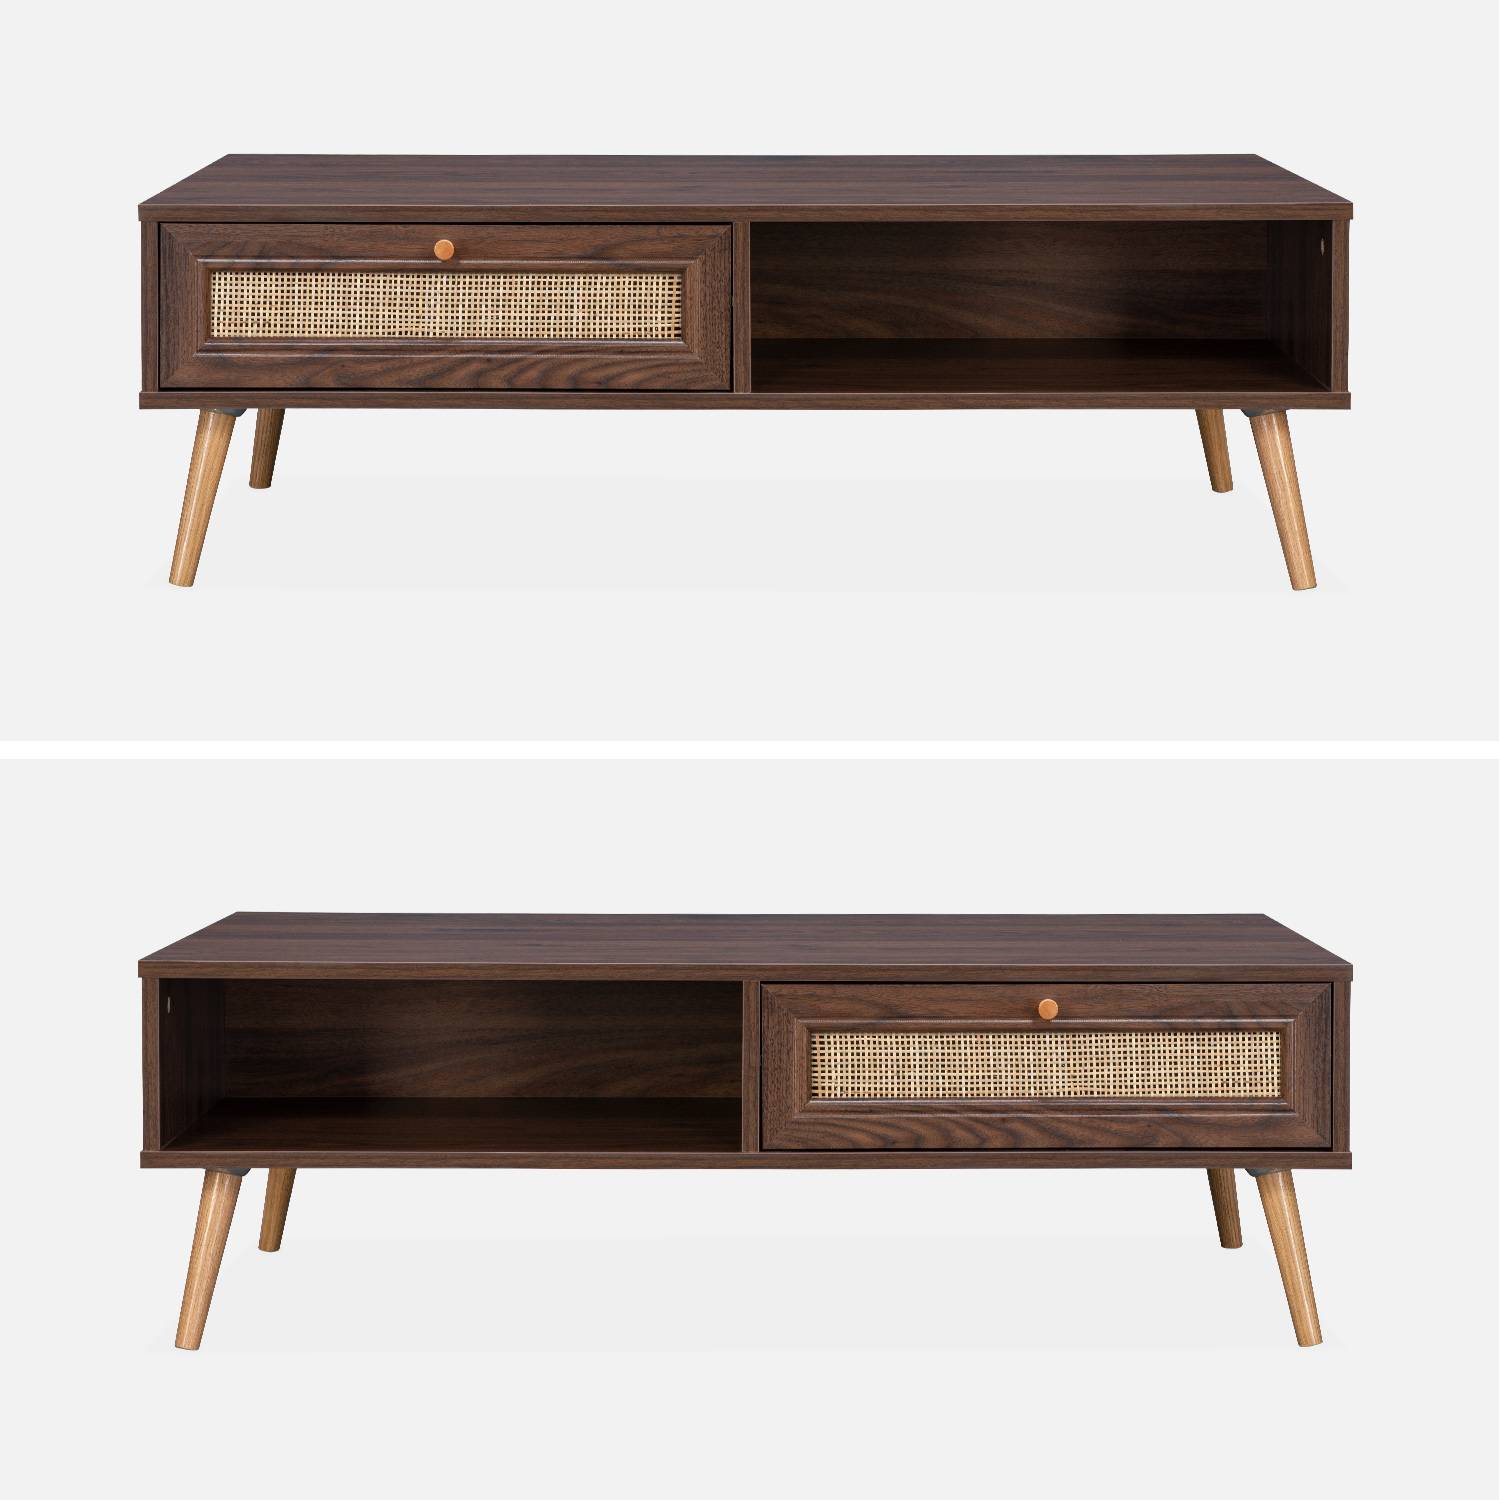  Wood and woven rattan coffee table with storage, 110x59x39cm, dark wood, Boheme,sweeek,Photo2